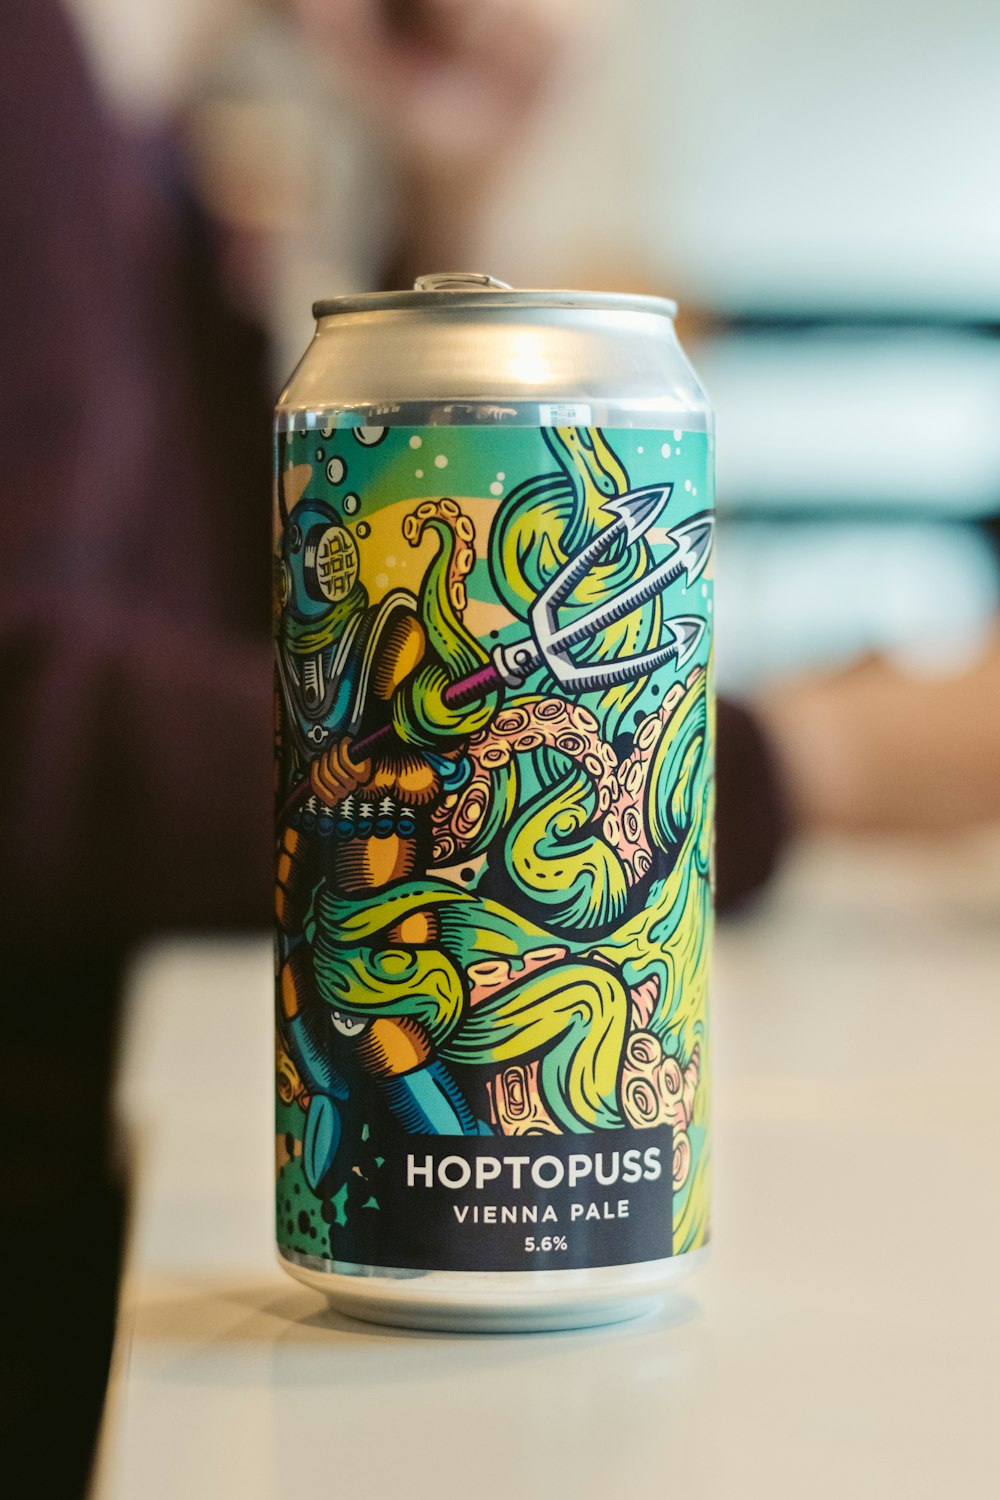 Hoptopuss can